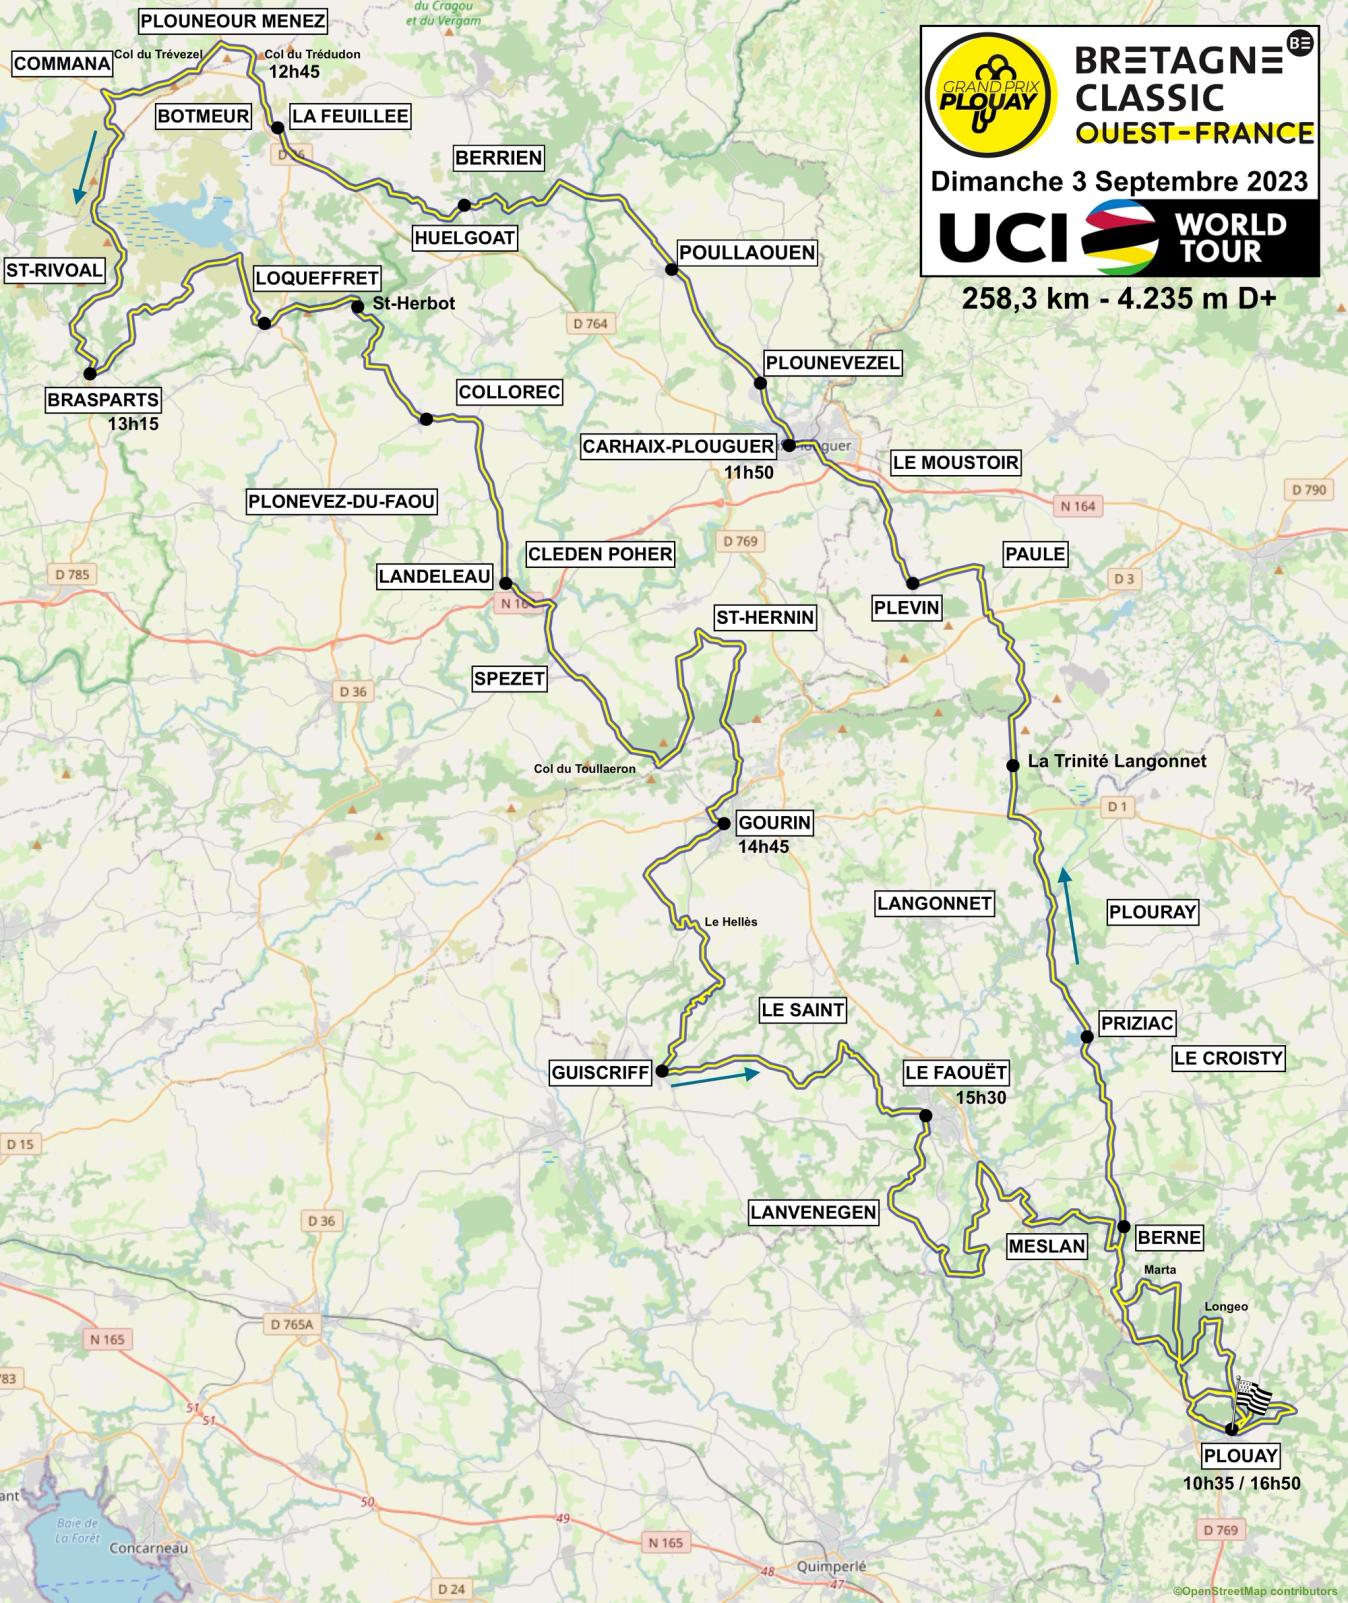 Bretagne Classic 2023 route map